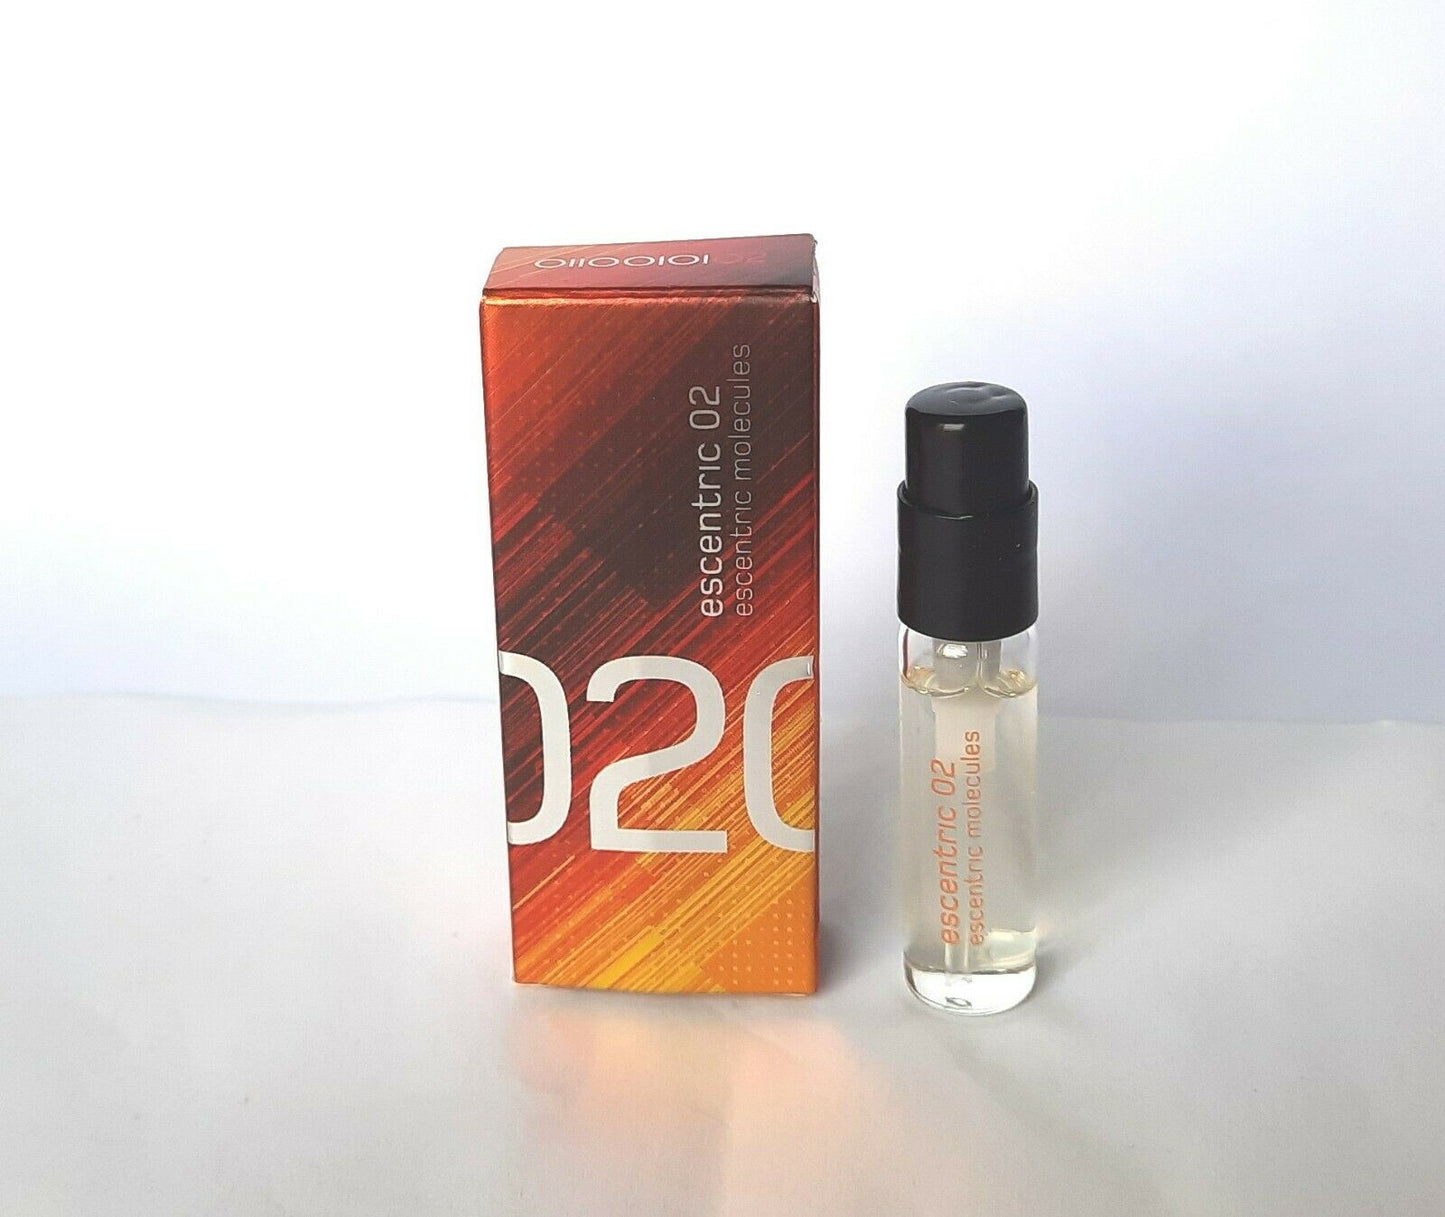 Escentric Molecules Escentric 02 official perfume sample 2ml 0.06 fl. o.z.